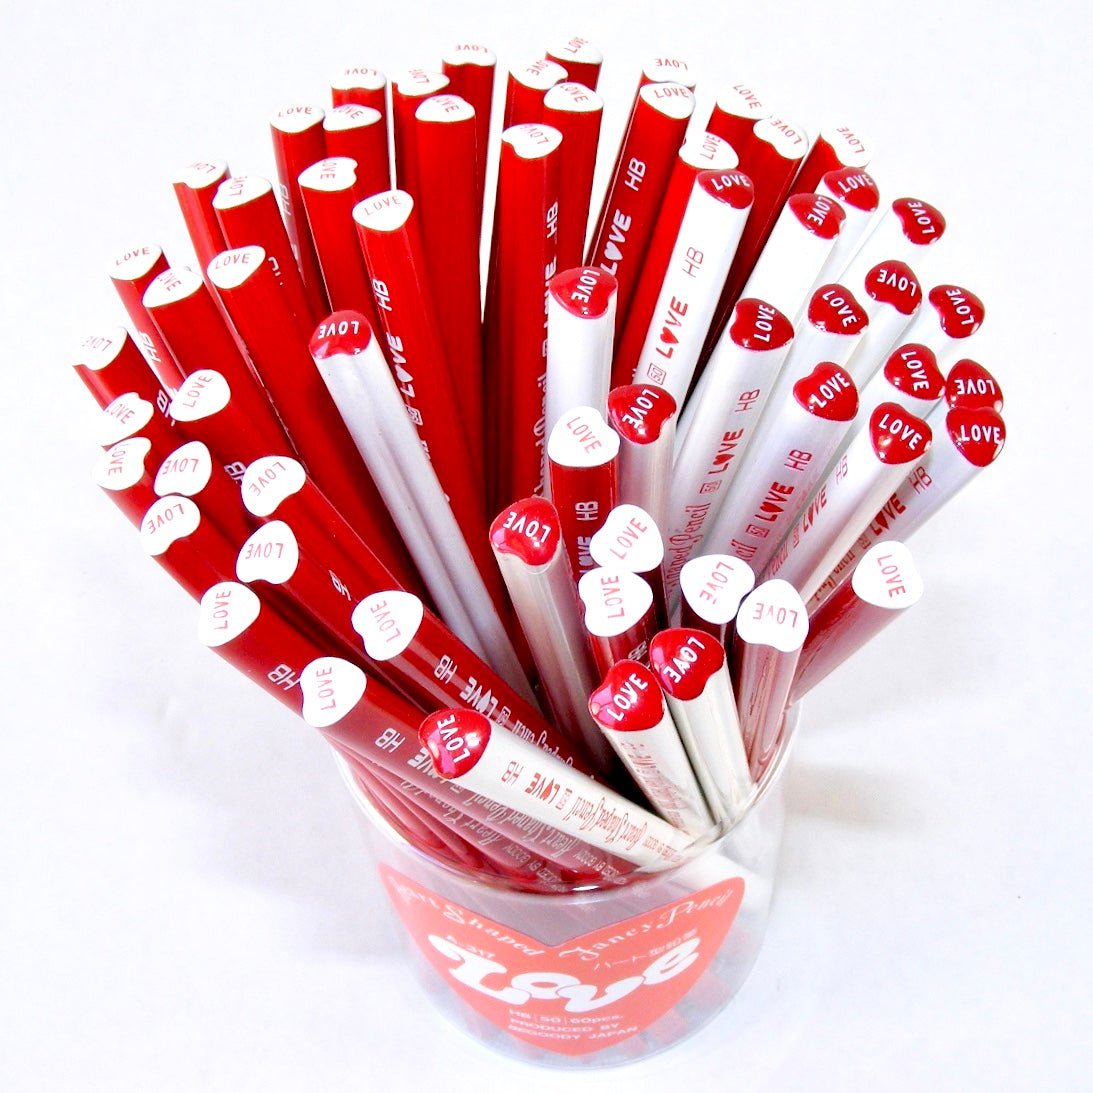 Valentines Pencils » Kaley Ann